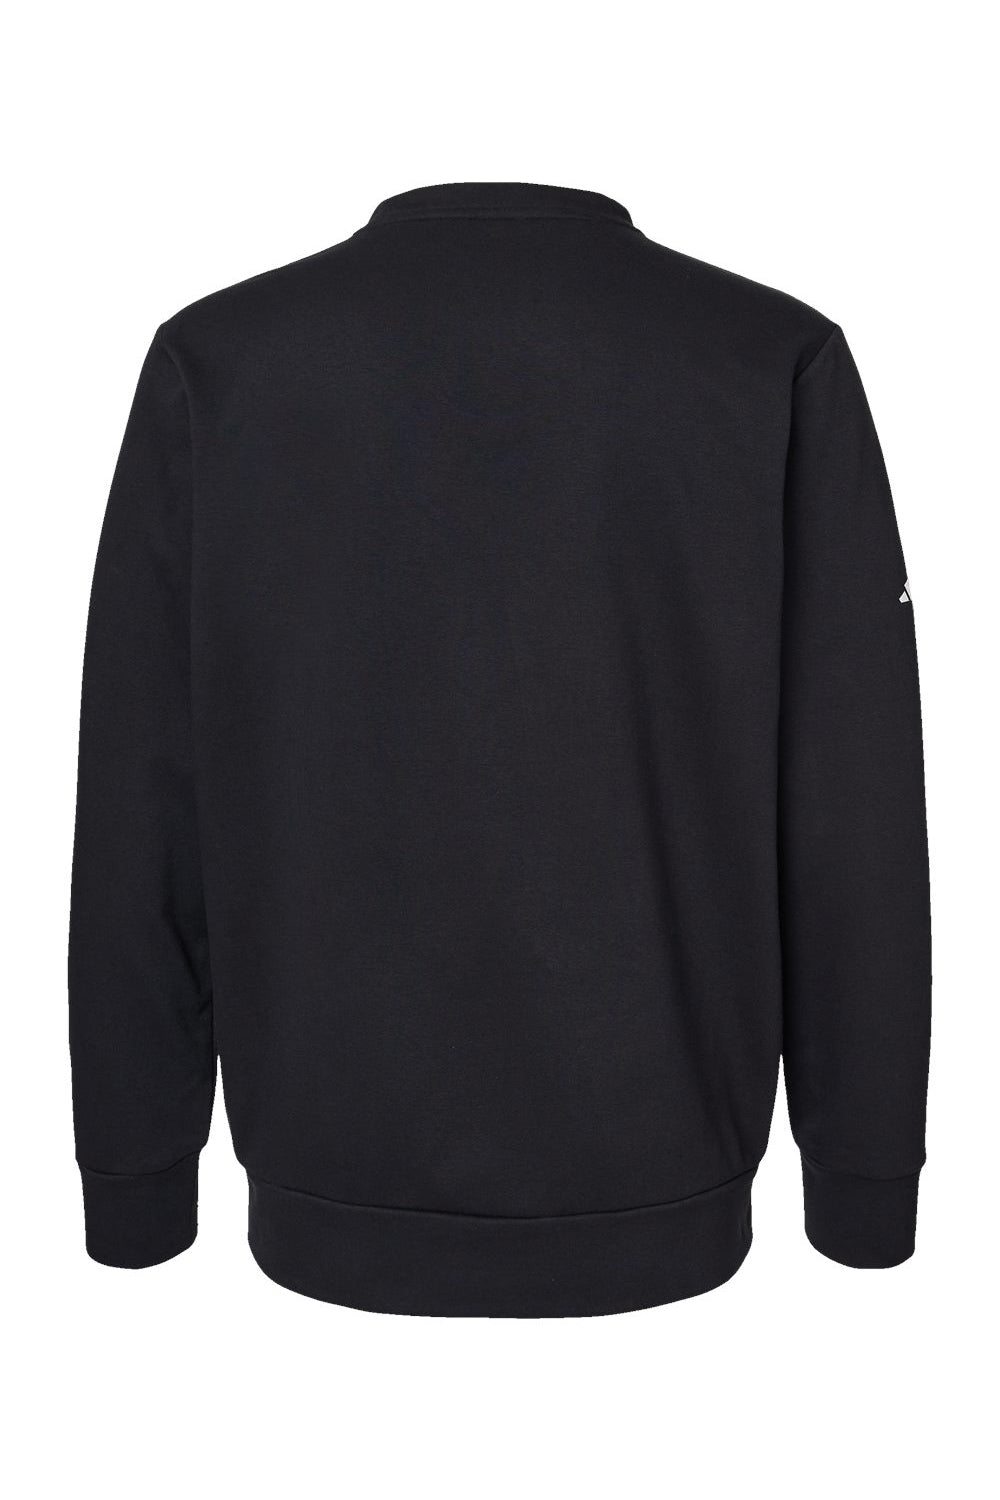 Adidas A434 Mens Fleece Crewneck Sweatshirt Black Flat Back